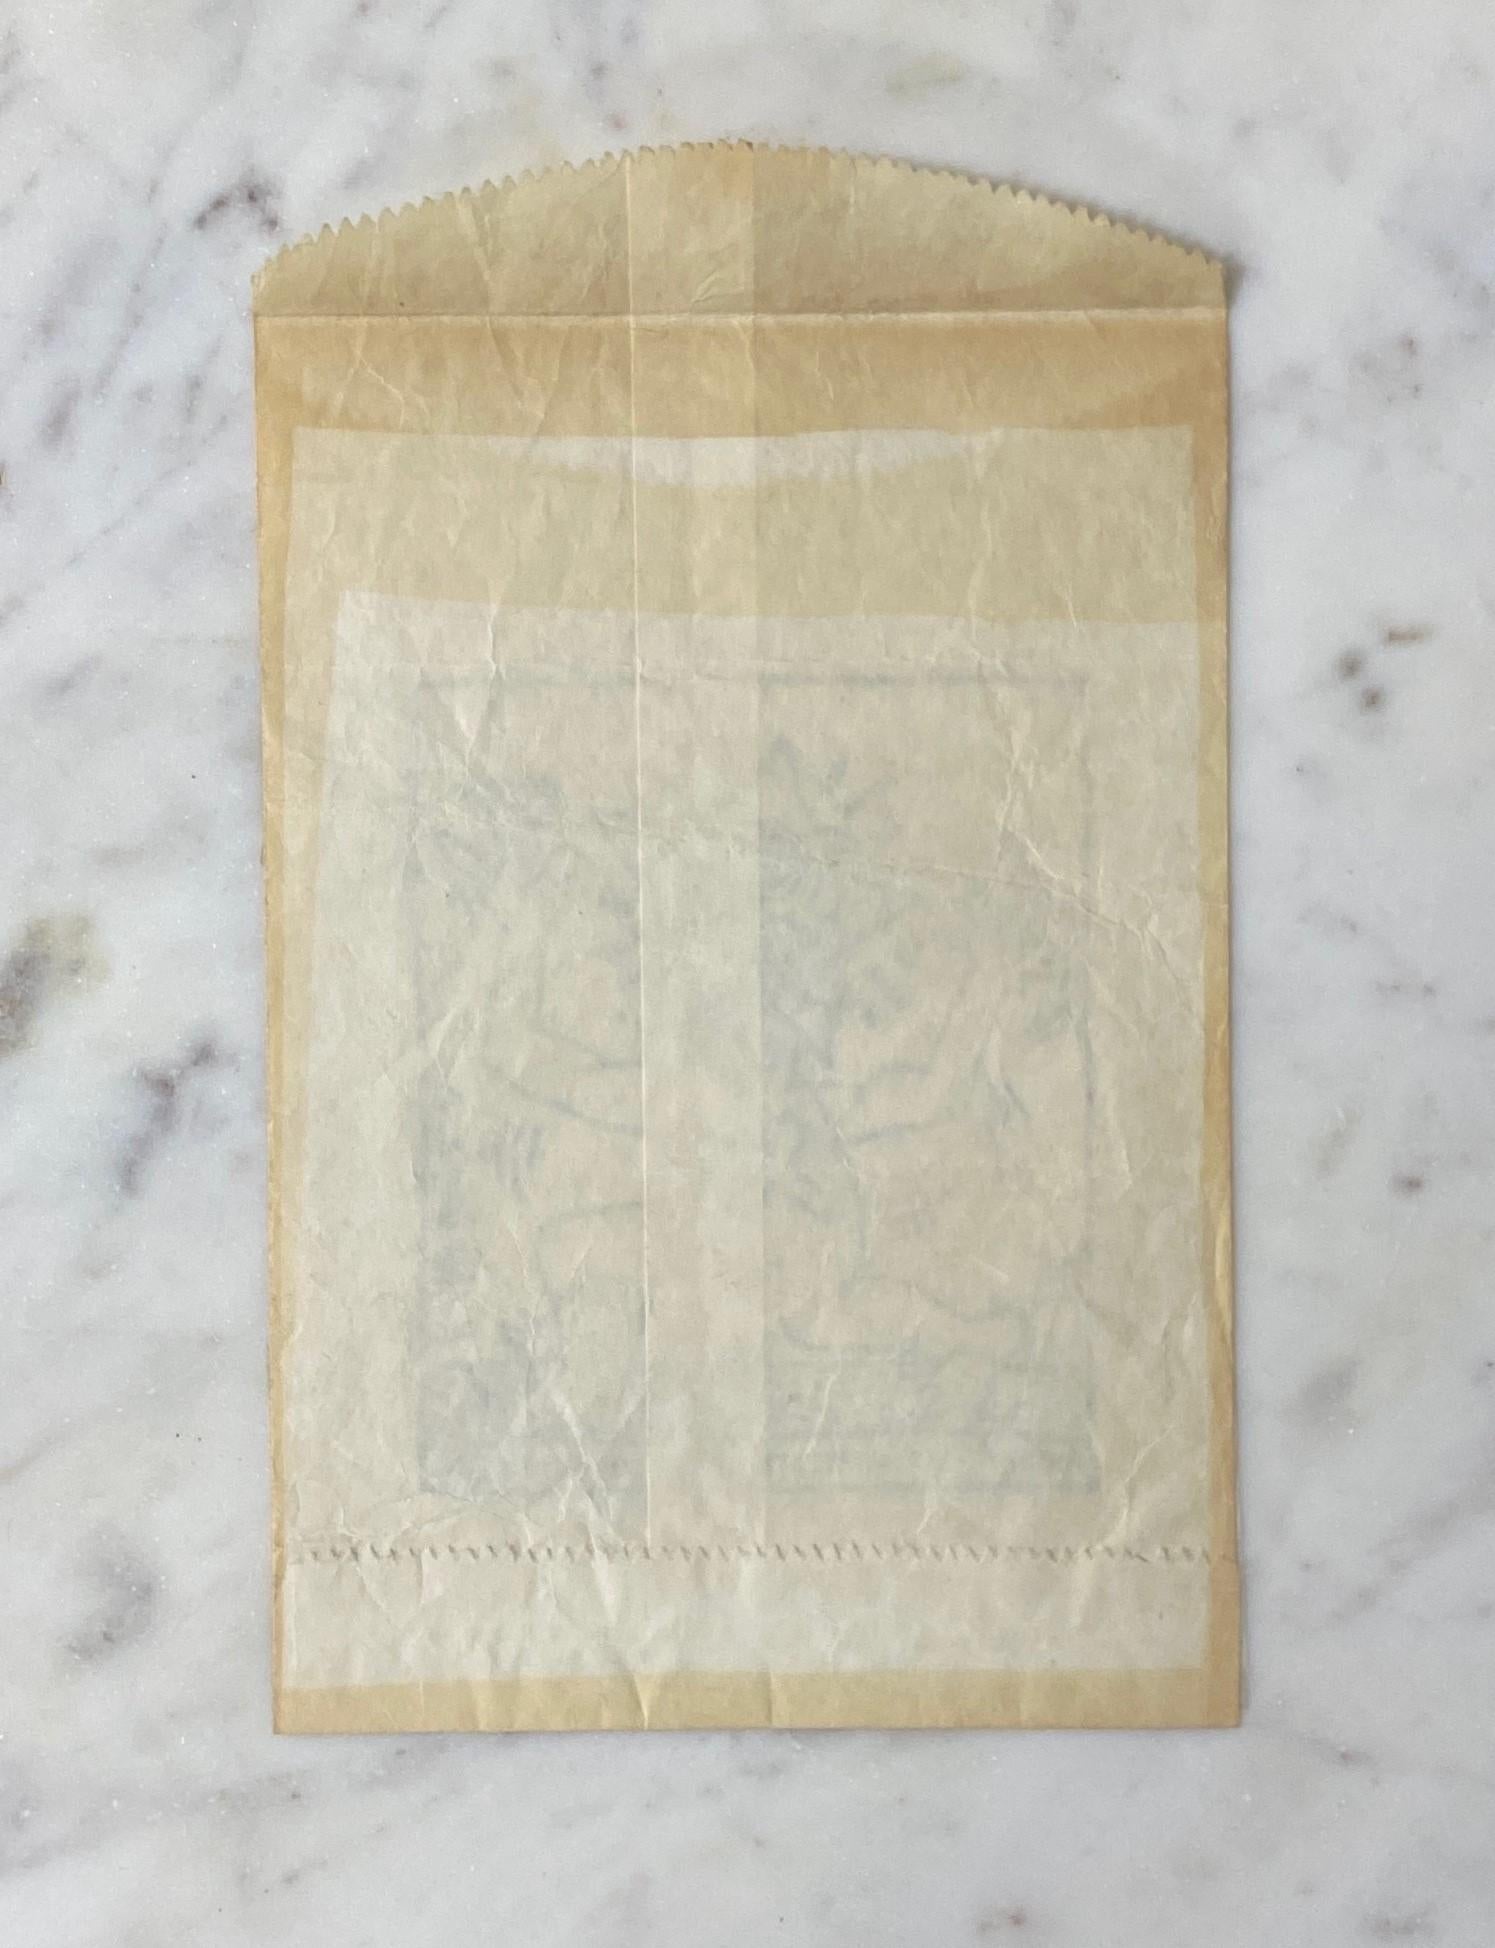 Keith Haring Original New York City Pop Shop Lithograph Bag With Bonus, 1980s For Sale 1